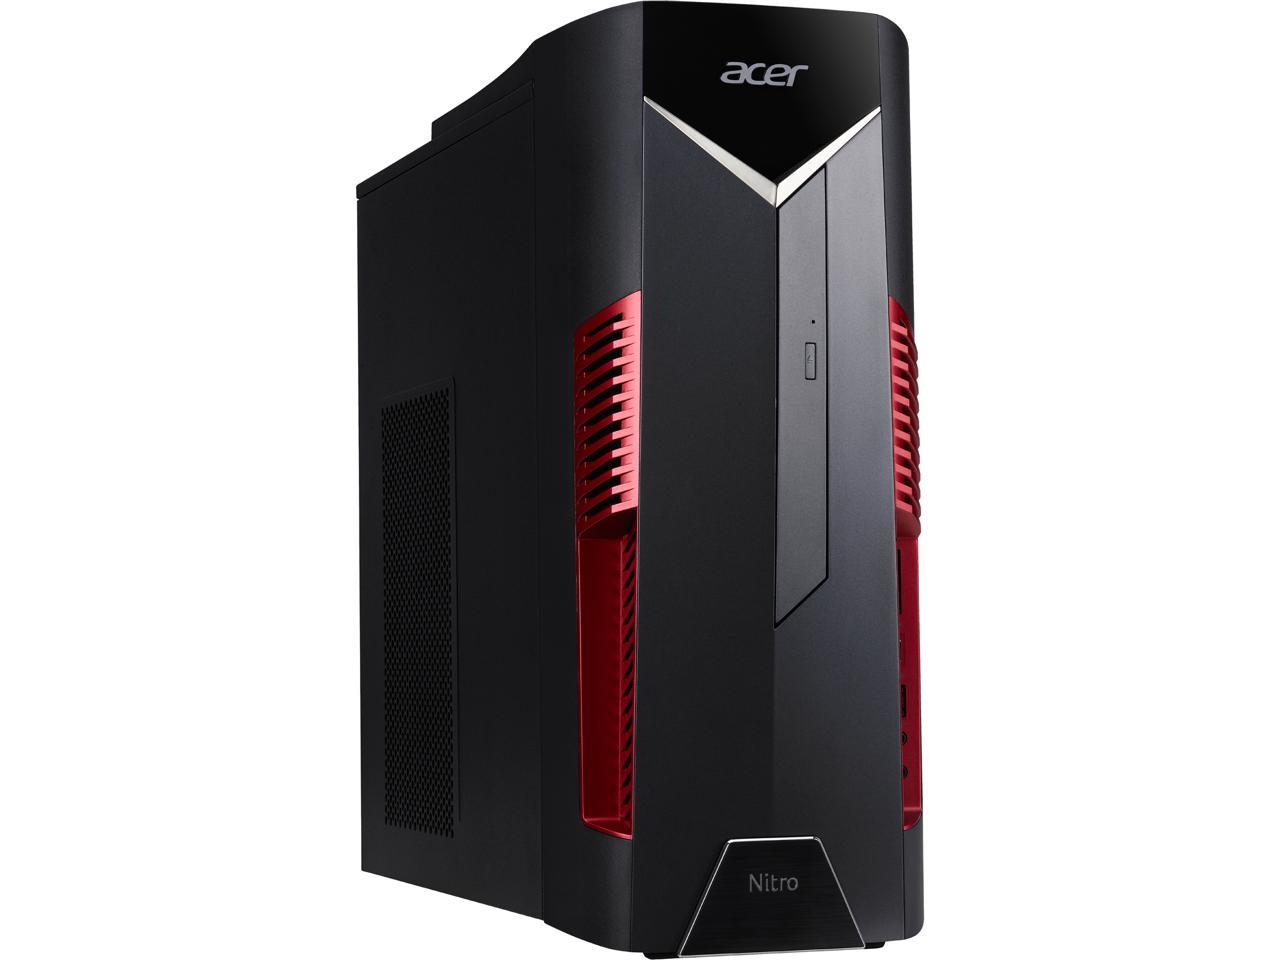 Acer - Gaming Desktop PC - Intel Core i5-9400F (2.90 GHz), NVIDIA ...